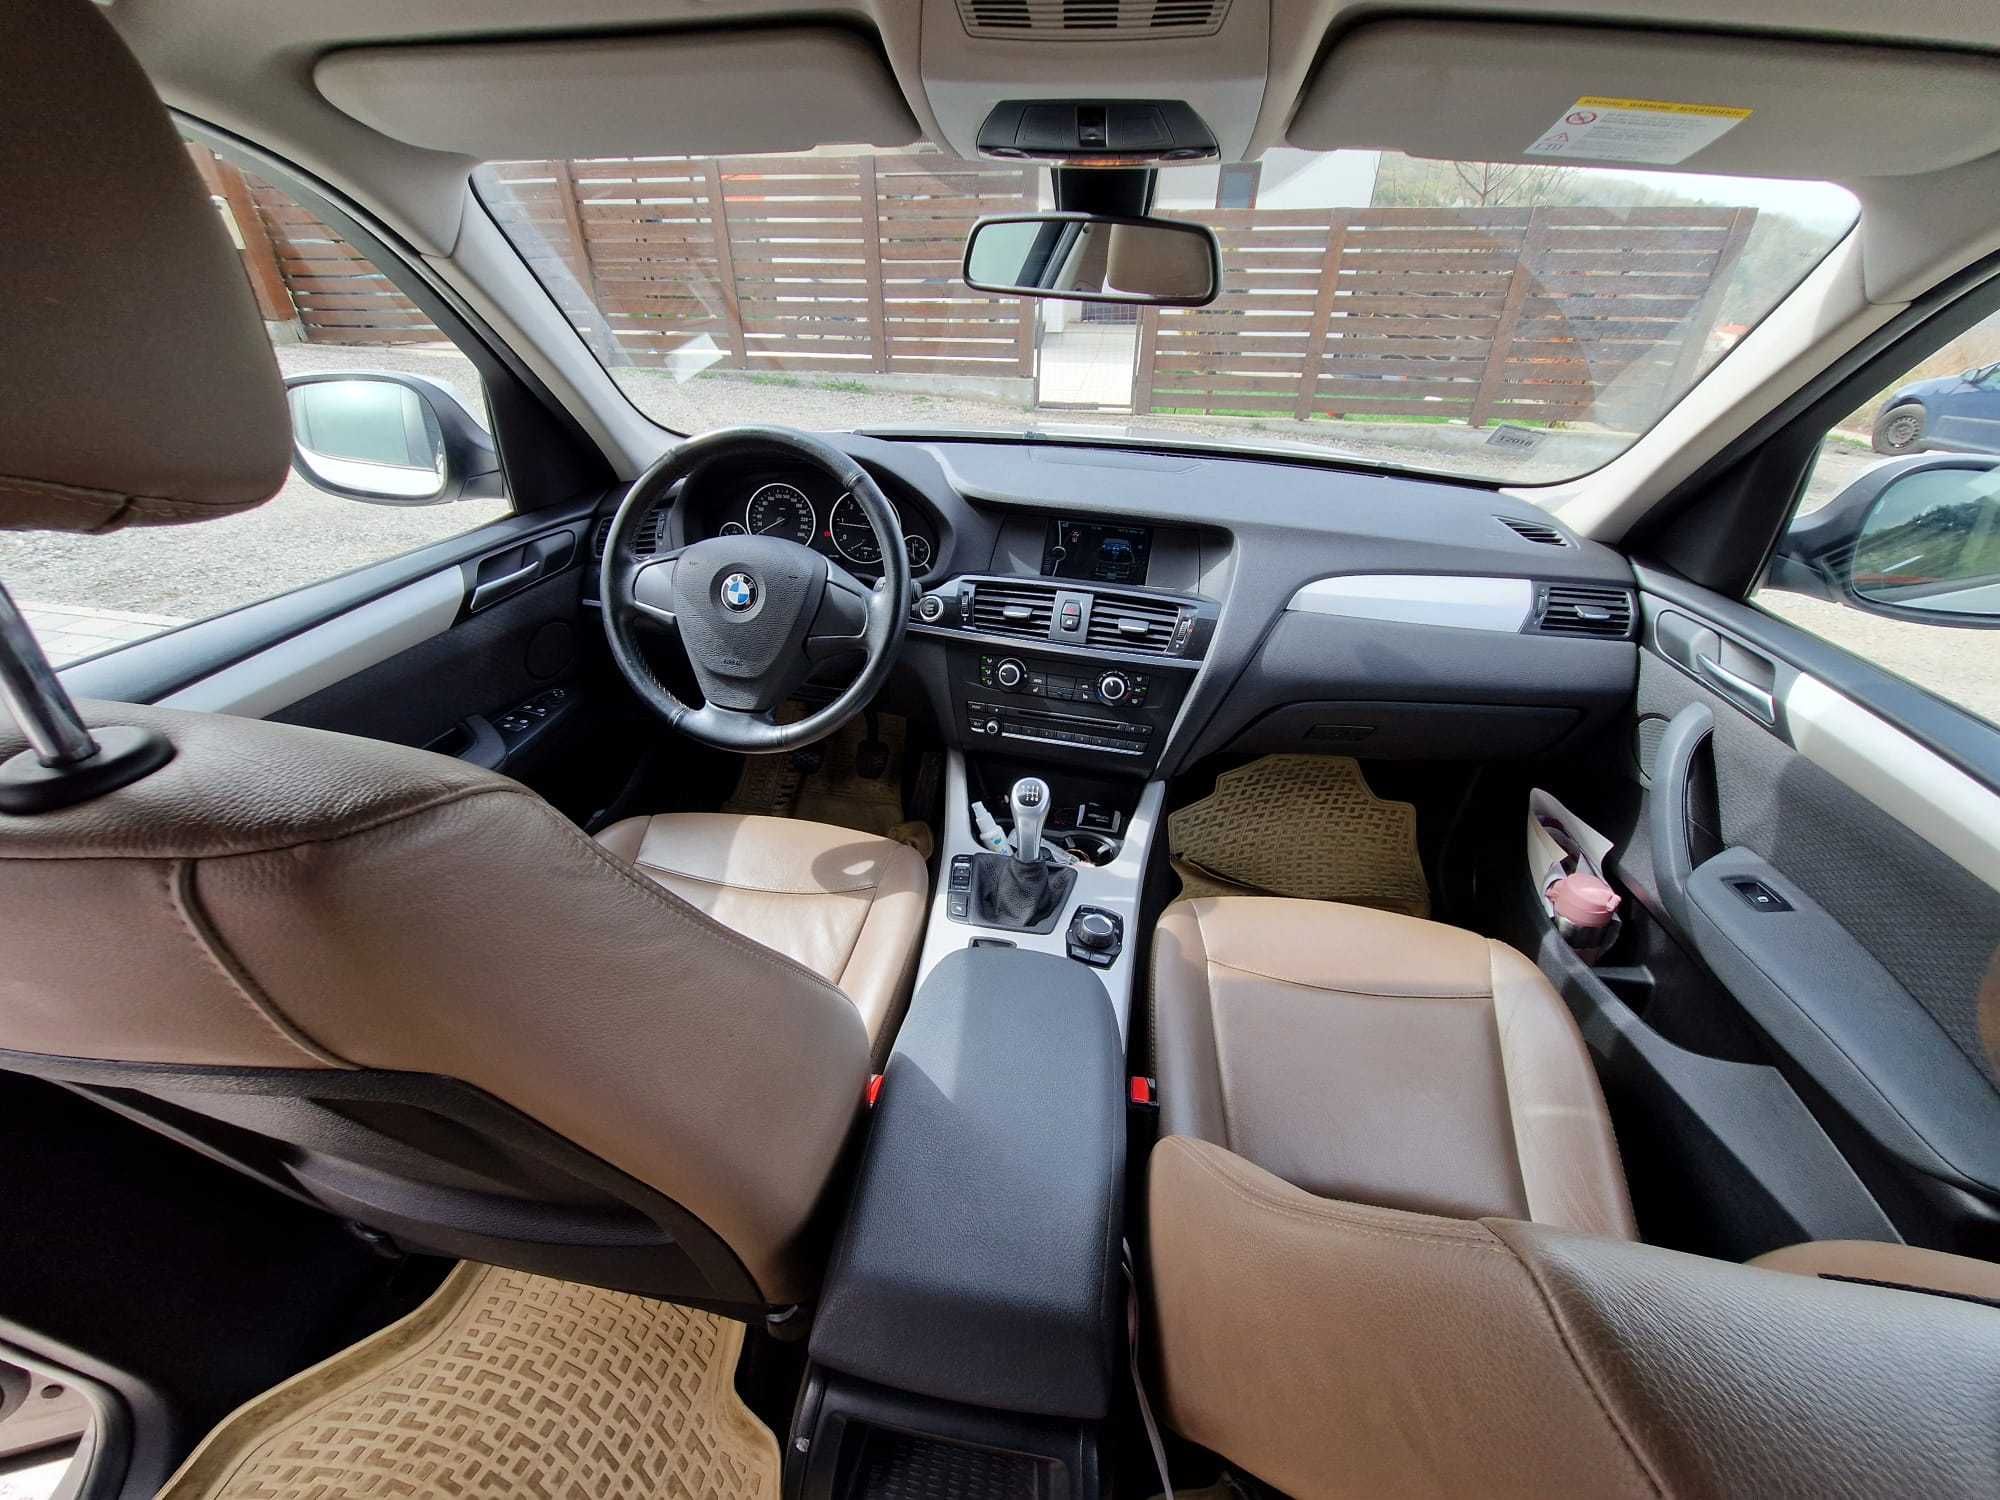 BMW X3 2013, SDrive 18d, panoramic, km reali